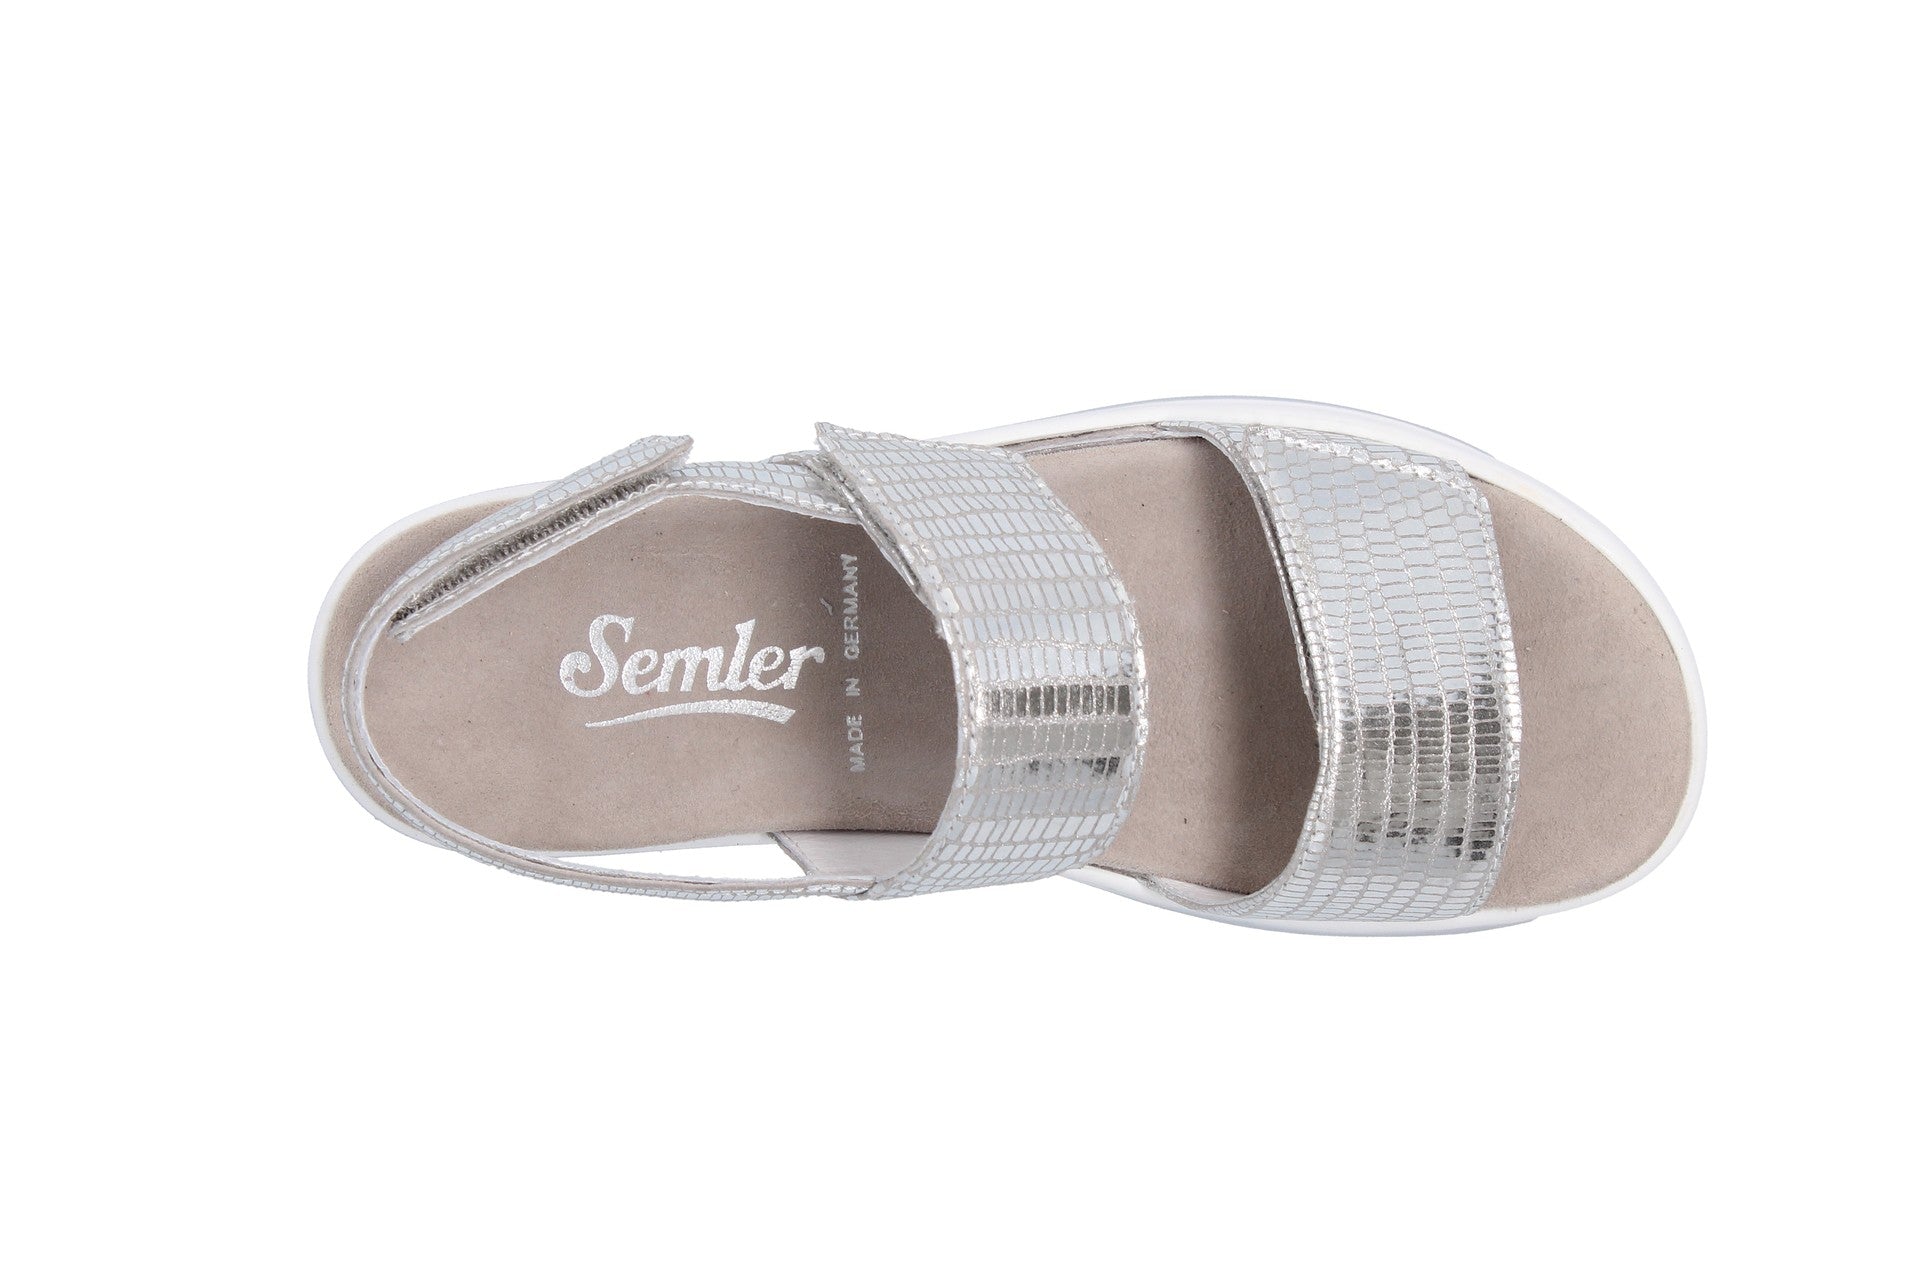 Hanna – silver – sandals